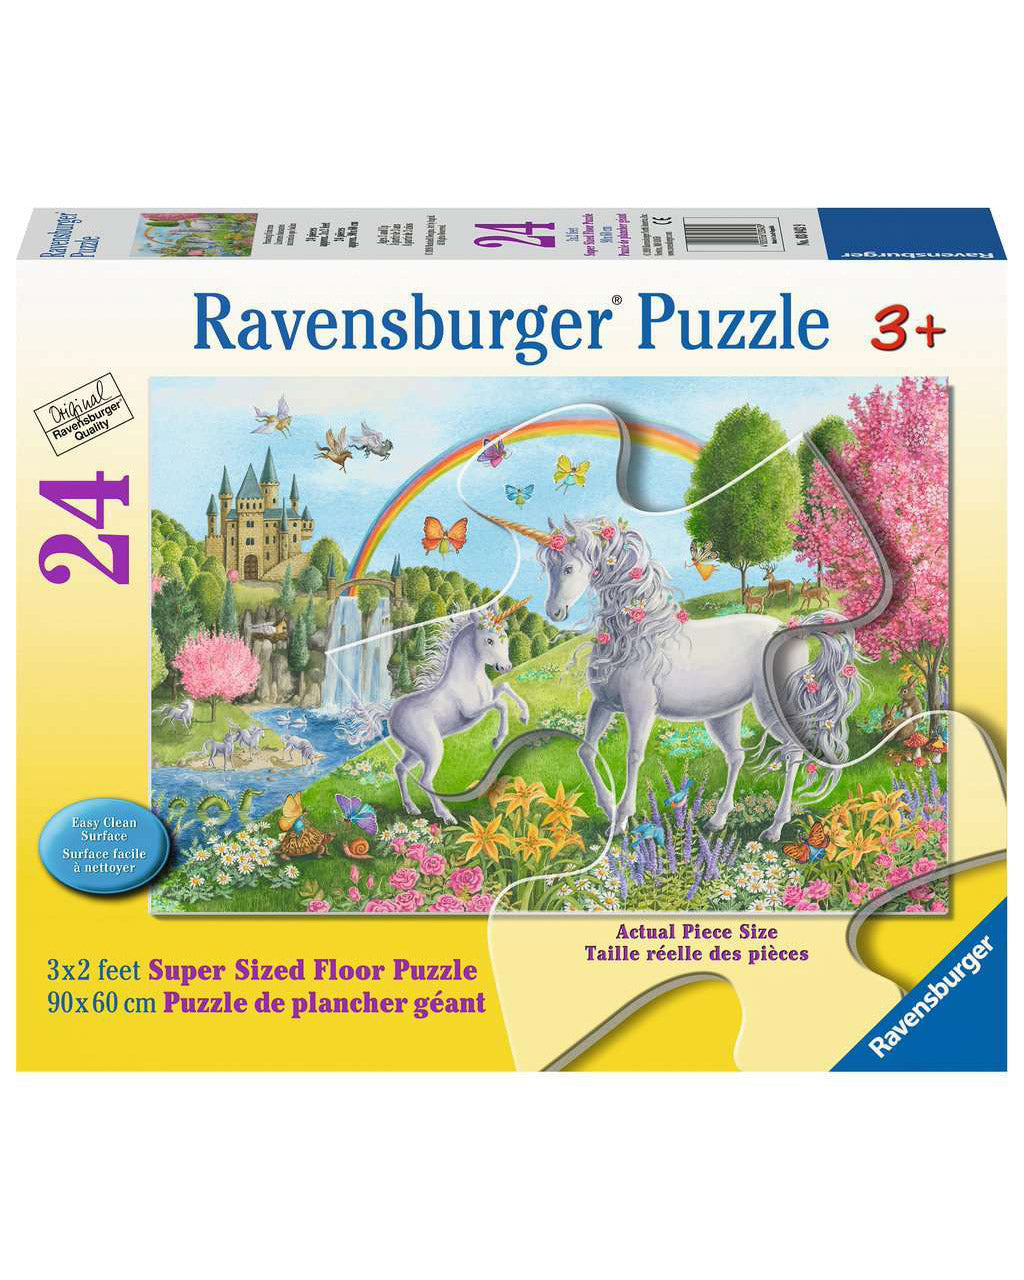 Ravensburger Puzzle - Prancing Unicorns 24pc